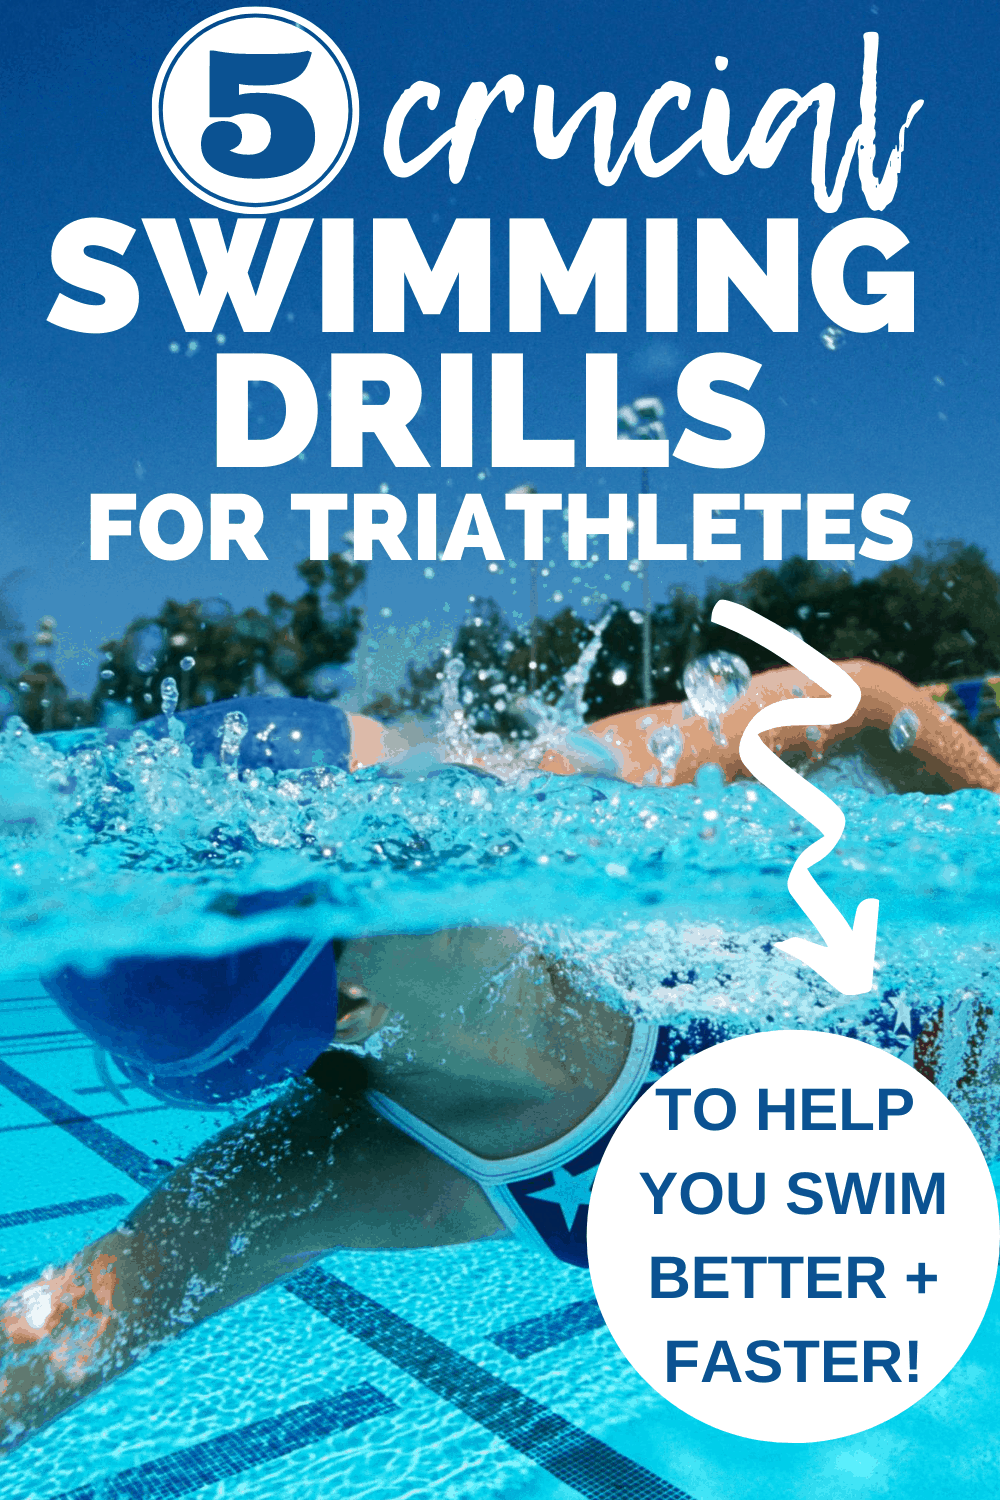 Swim form tips for triathletes: Fall warm up drills that improve technique  - Triathlon Magazine Canada